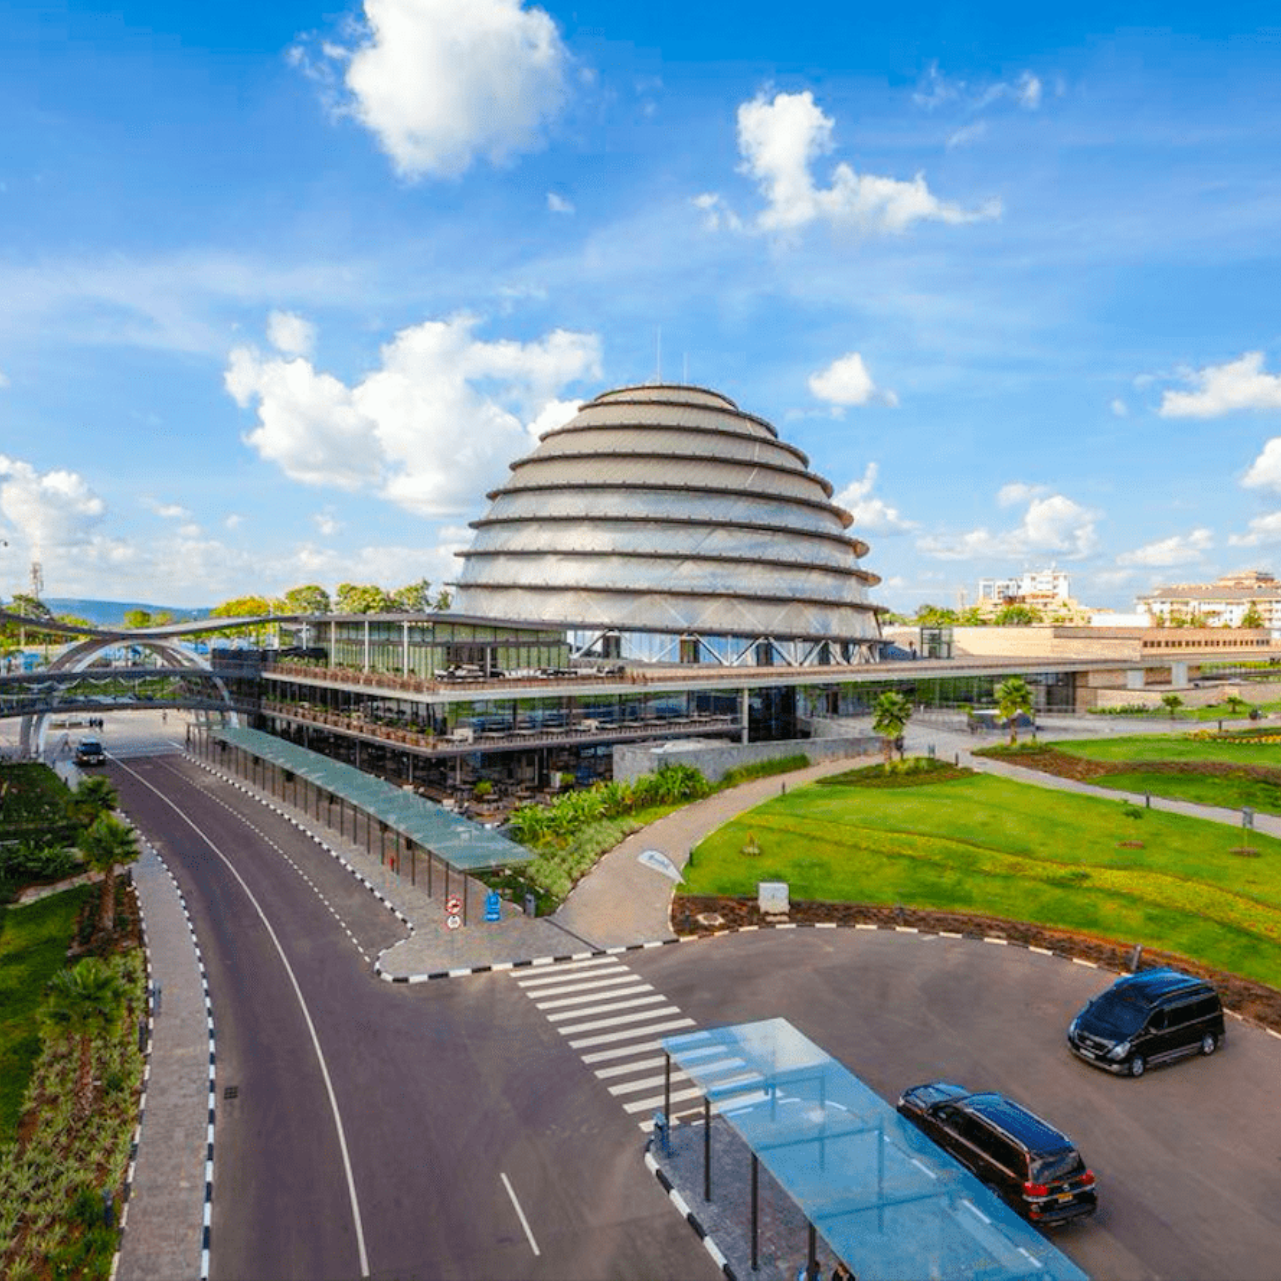 Kigali city